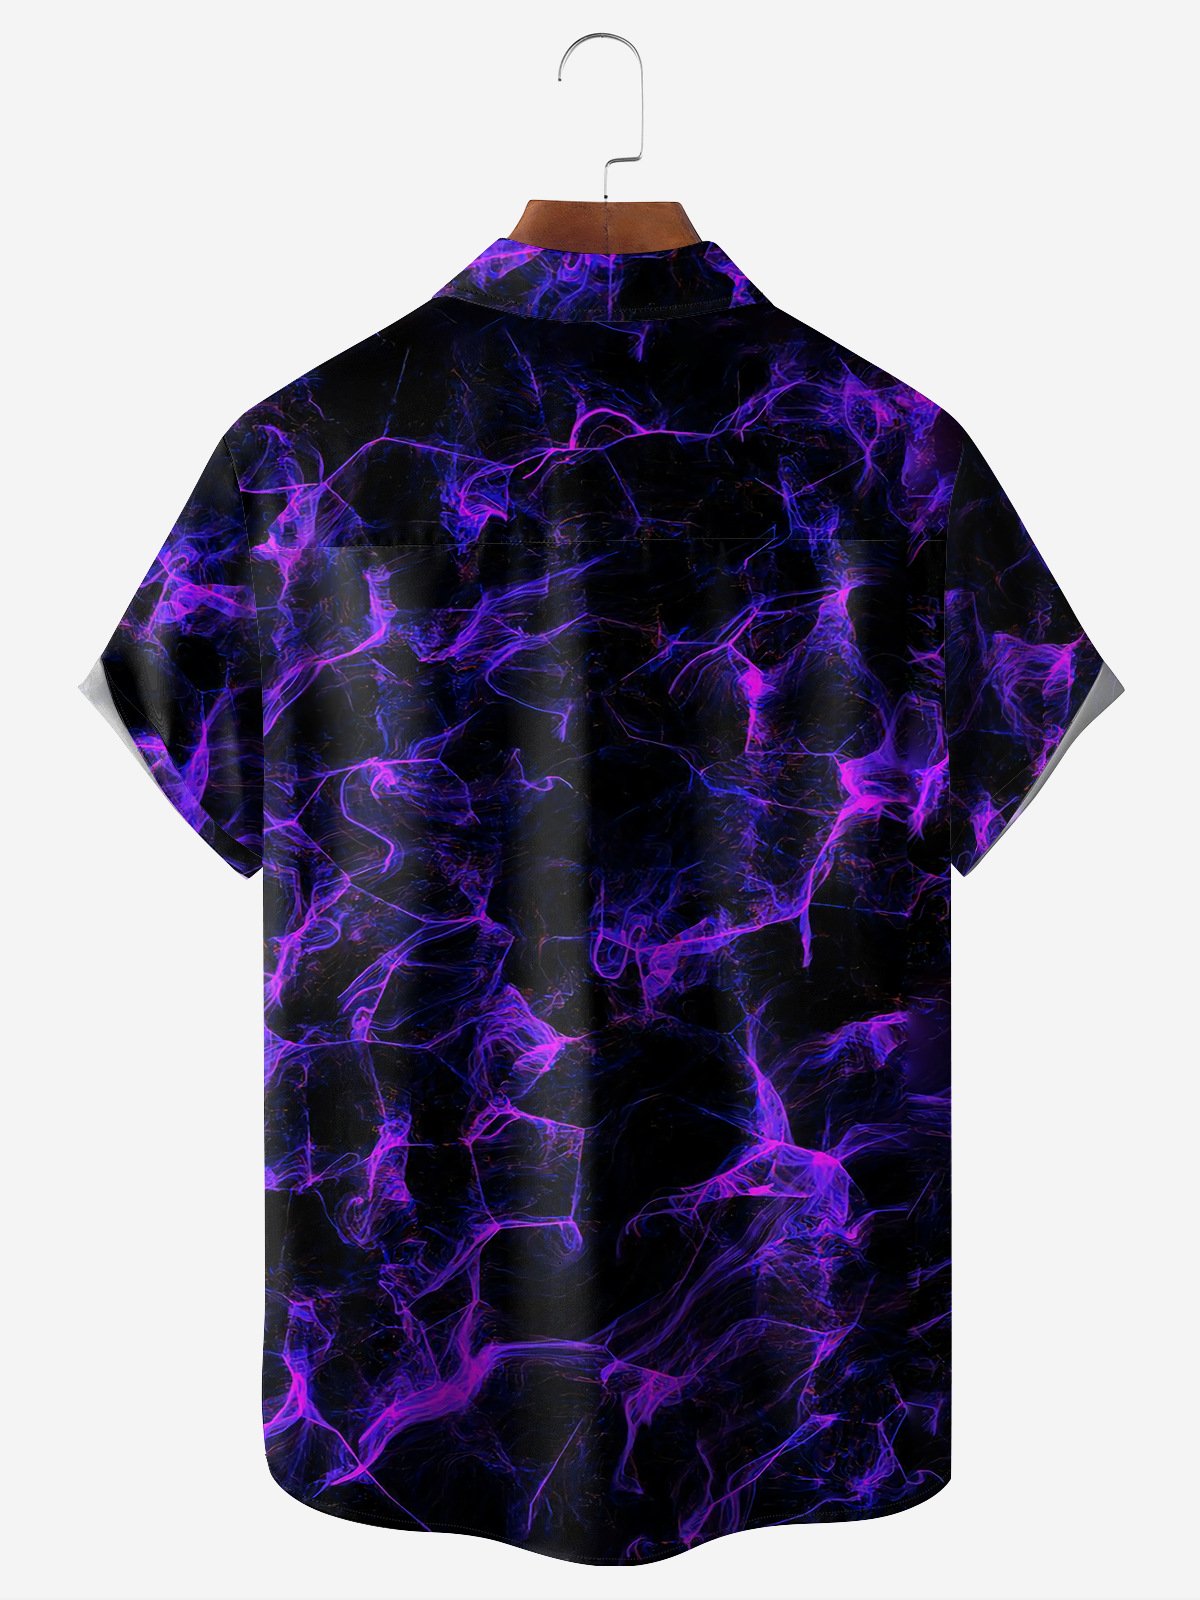 Black And Purple Crazy Flame Print Hardaddy Hawaiian Shirt for Men